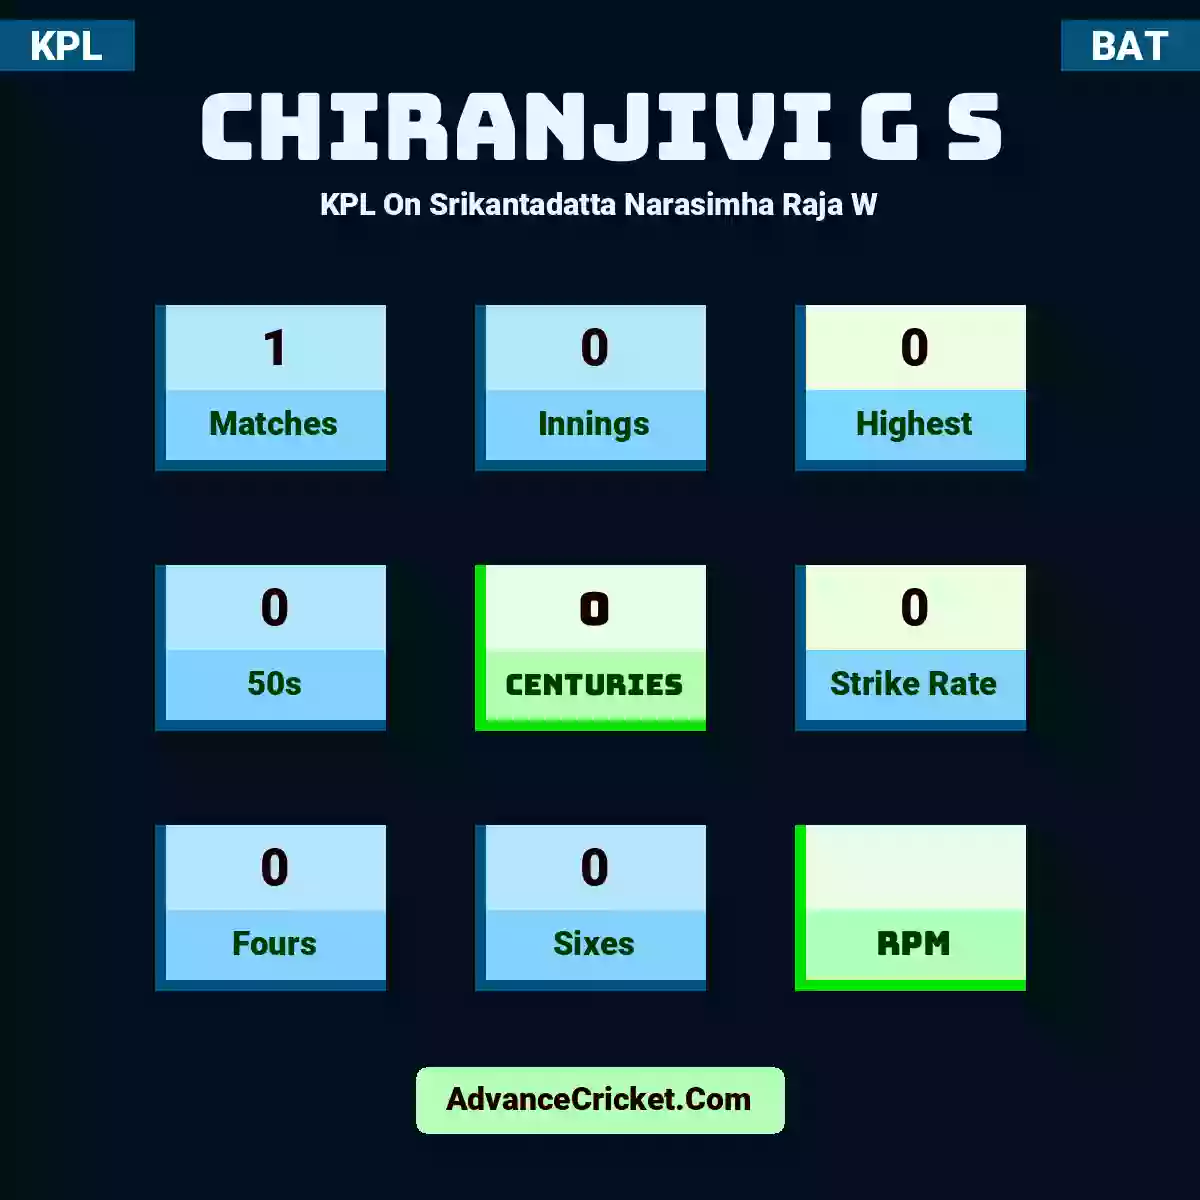 Chiranjivi G S KPL  On Srikantadatta Narasimha Raja W, Chiranjivi G S played 1 matches, scored 0 runs as highest, 0 half-centuries, and 0 centuries, with a strike rate of 0. C.S hit 0 fours and 0 sixes.